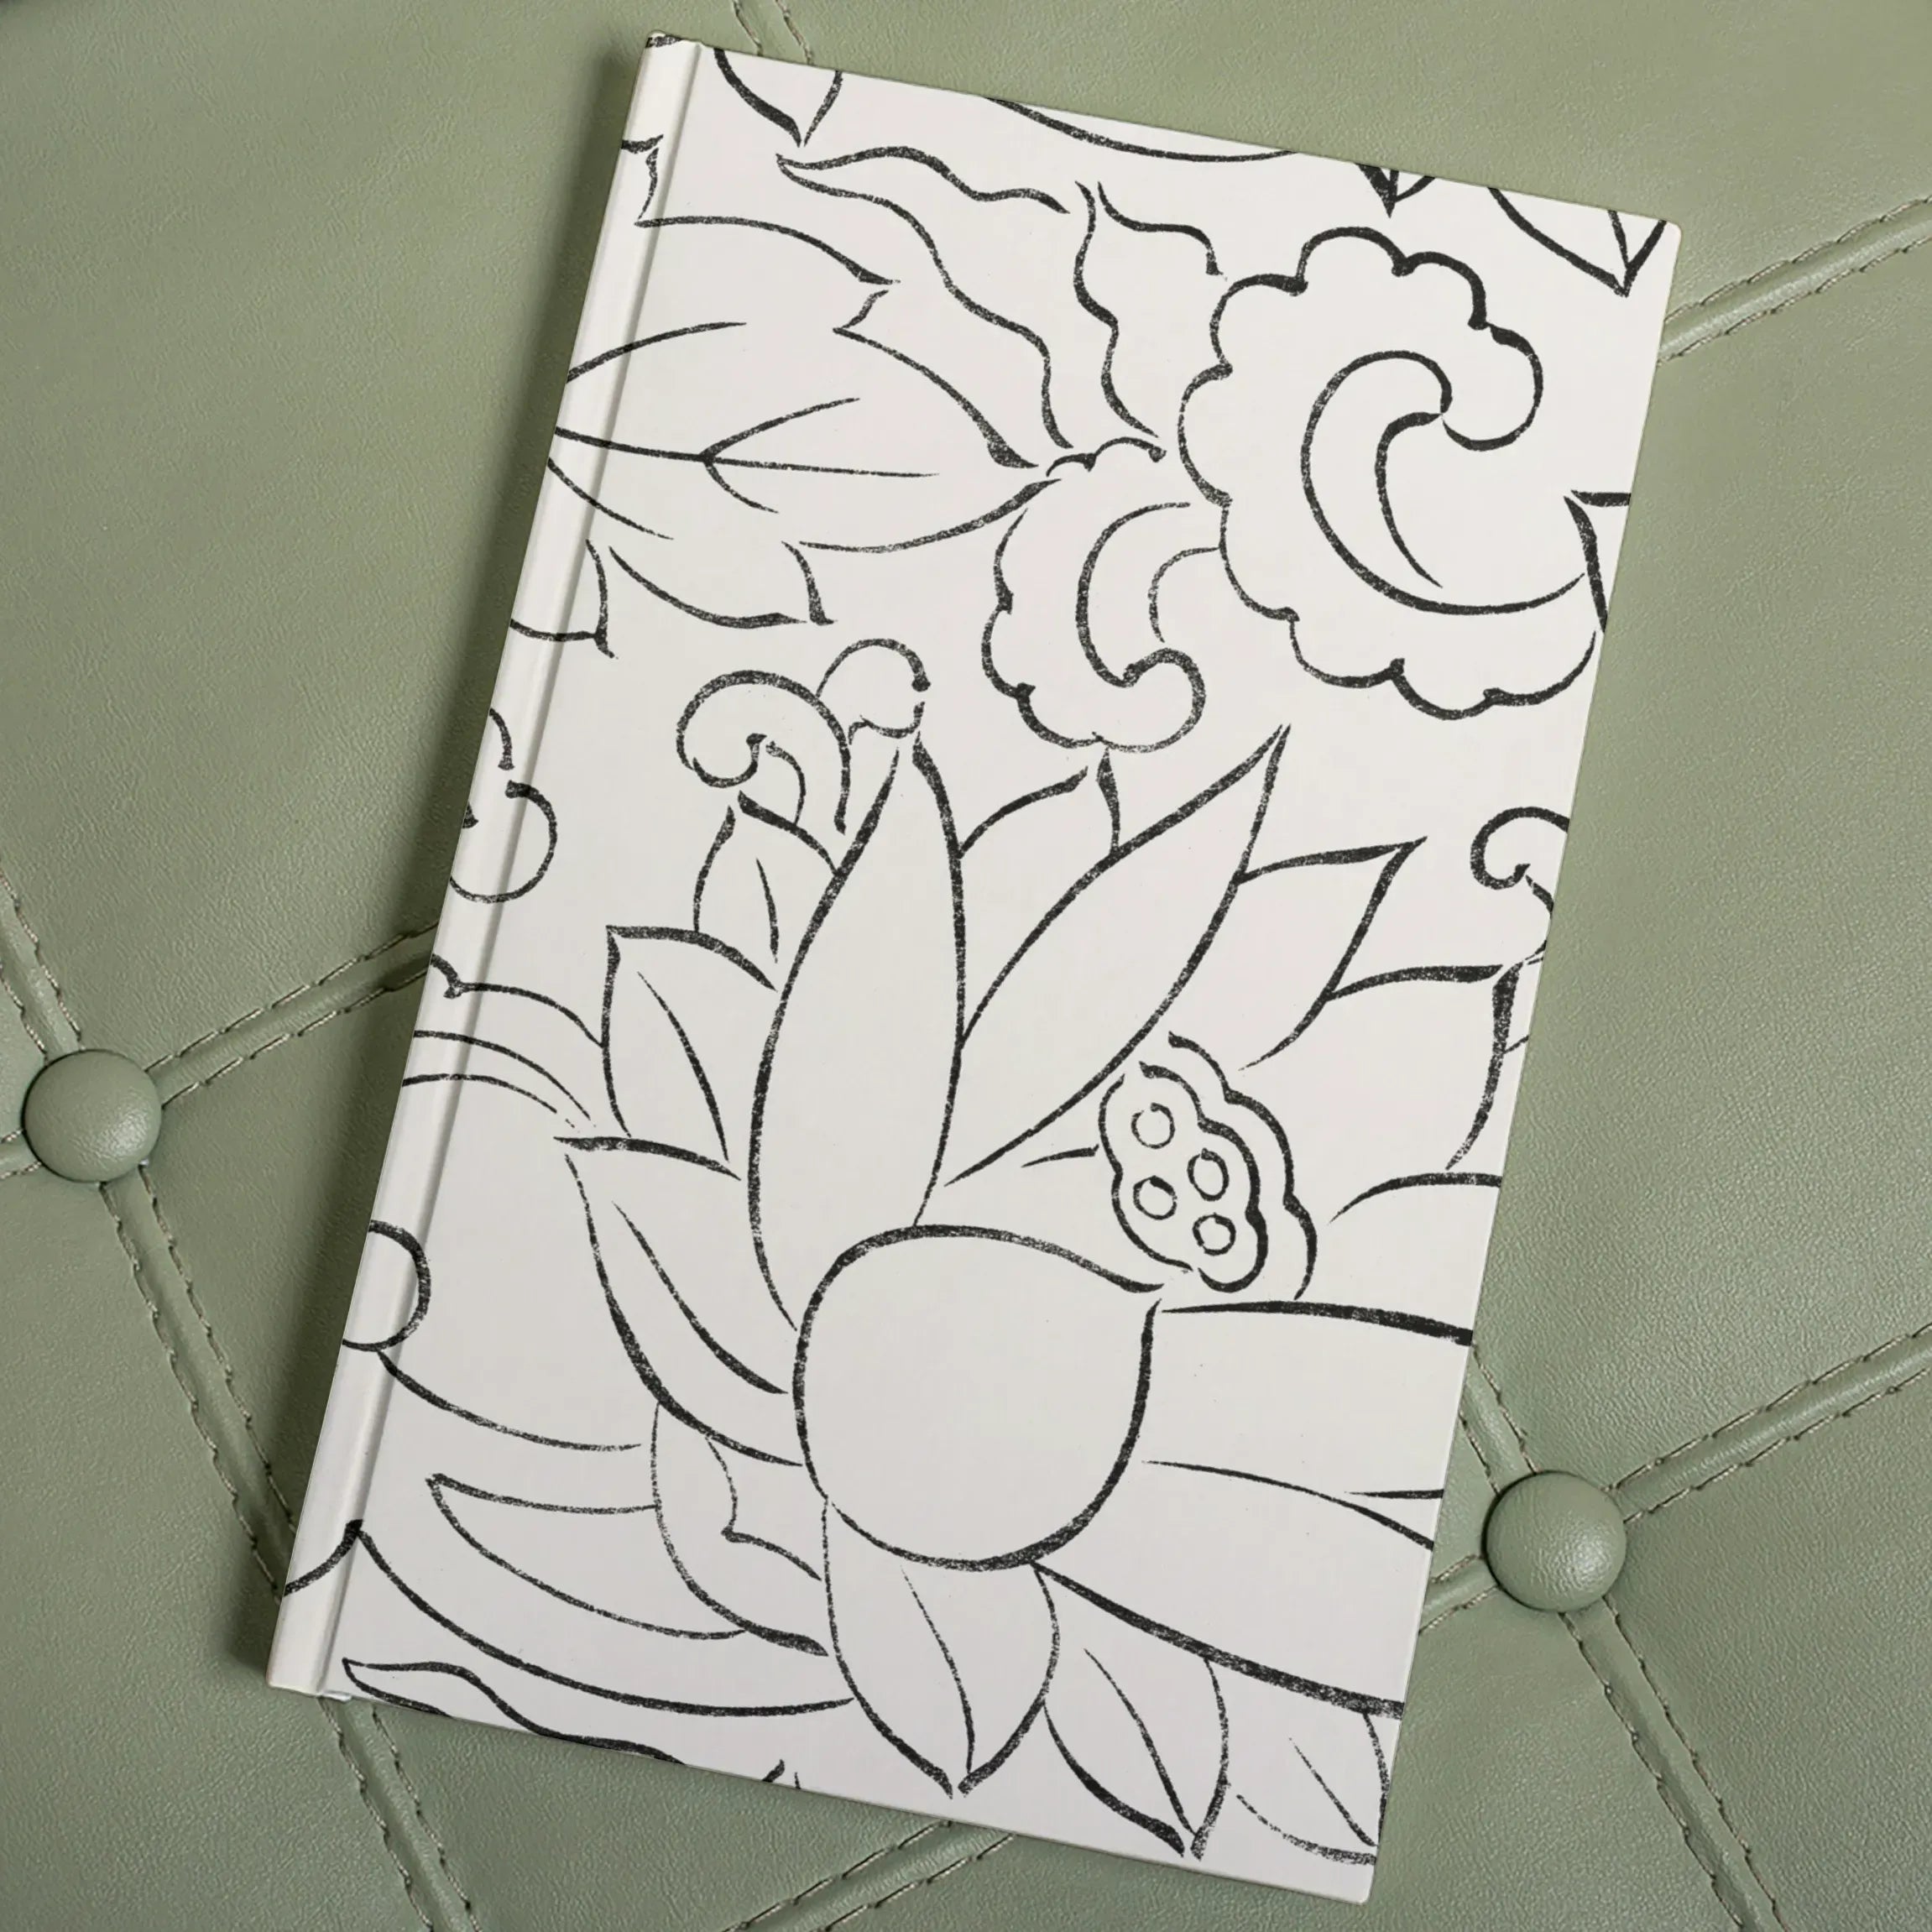 Black & White Floral Woodblock Print By Taguchi Tomoki Hardback Journal - 5’x7’ / Lined - Notebooks & Notepads